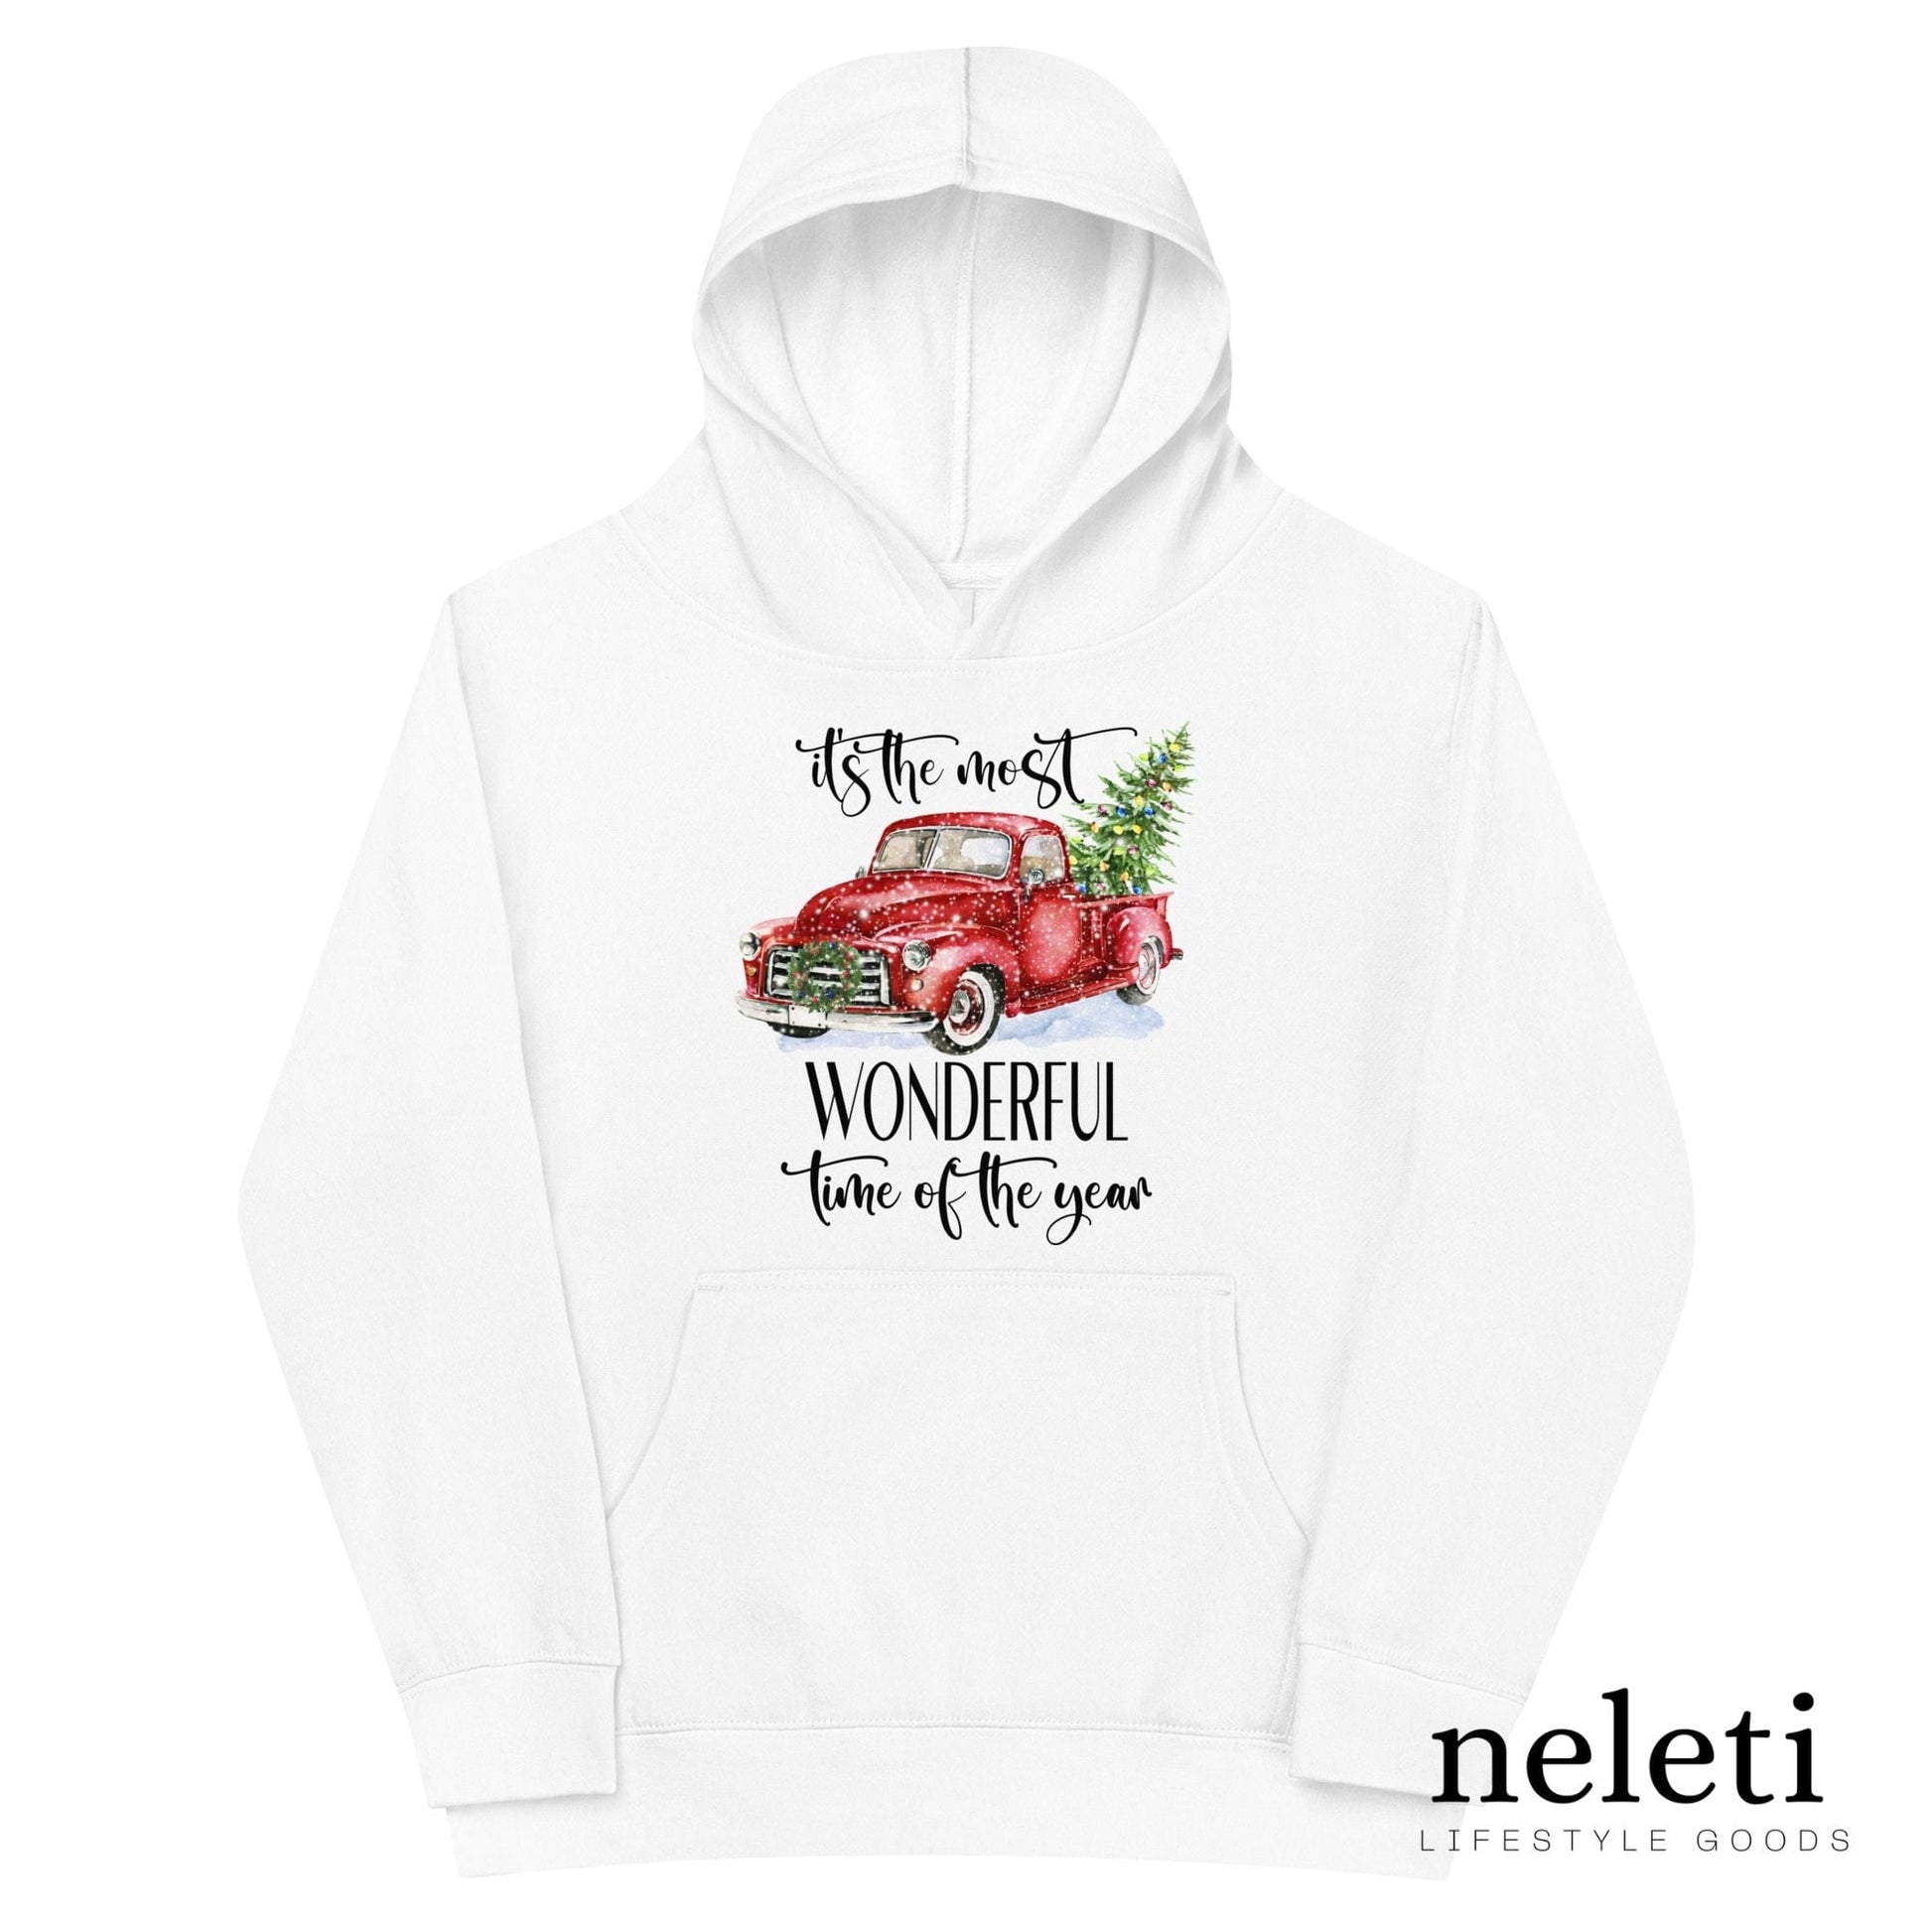 neleti.com-christmas-hoodies-for-kids